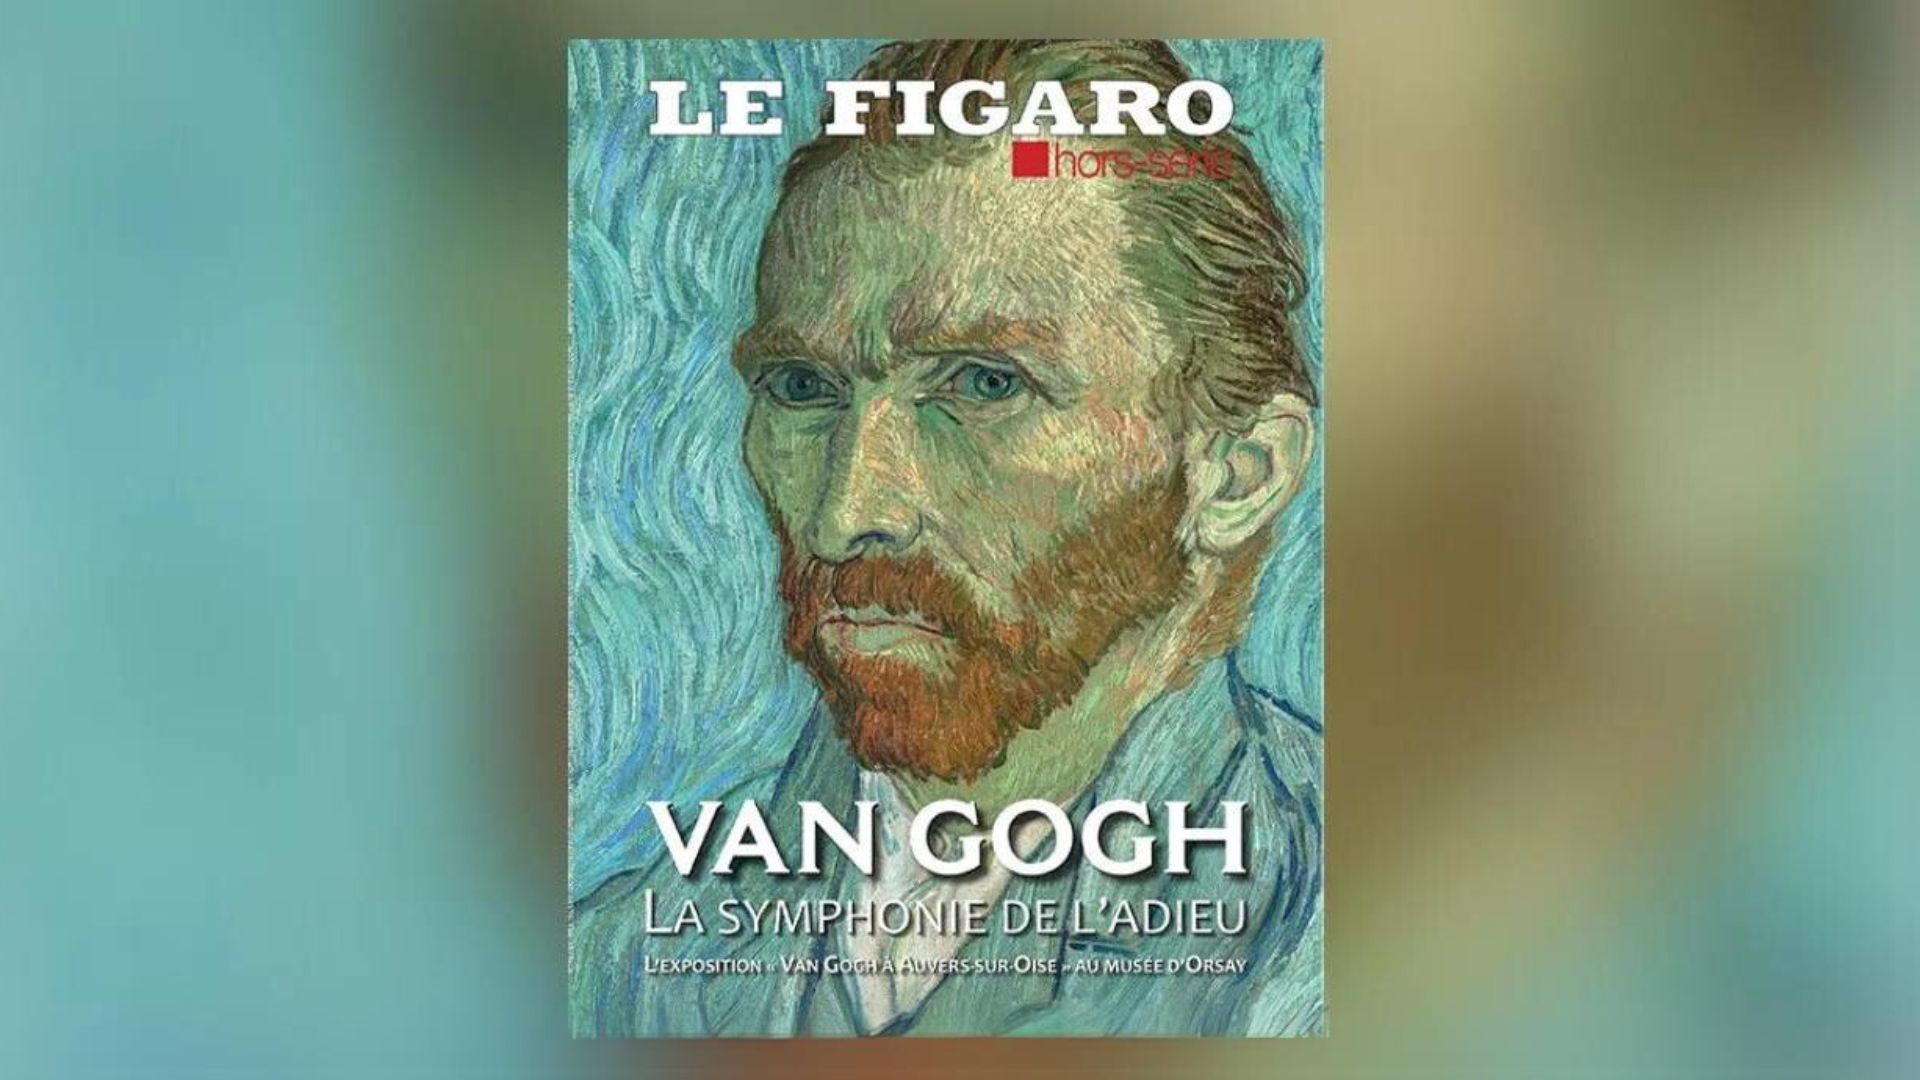 Le Figaro - Van Gogh (Agence La Cooperative Creative) studios bellagio Un spot radio publicitaire